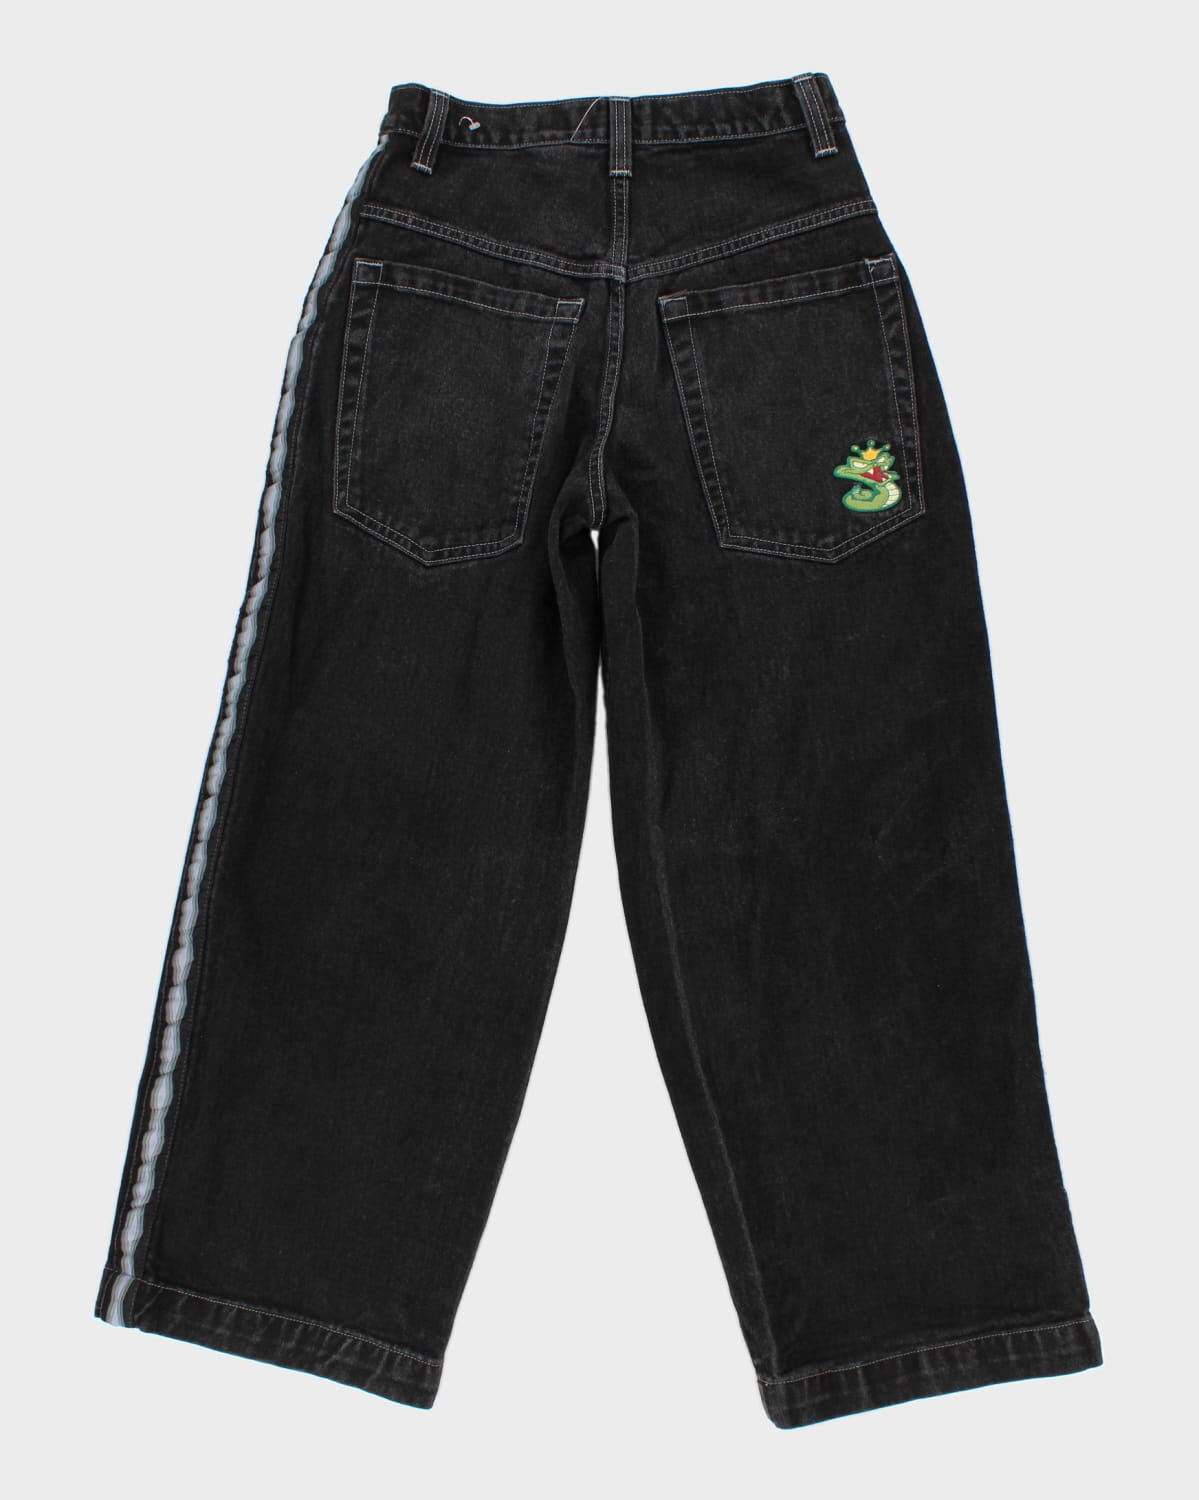 Vintage 90s JNCO Jeans Sidewinder 23